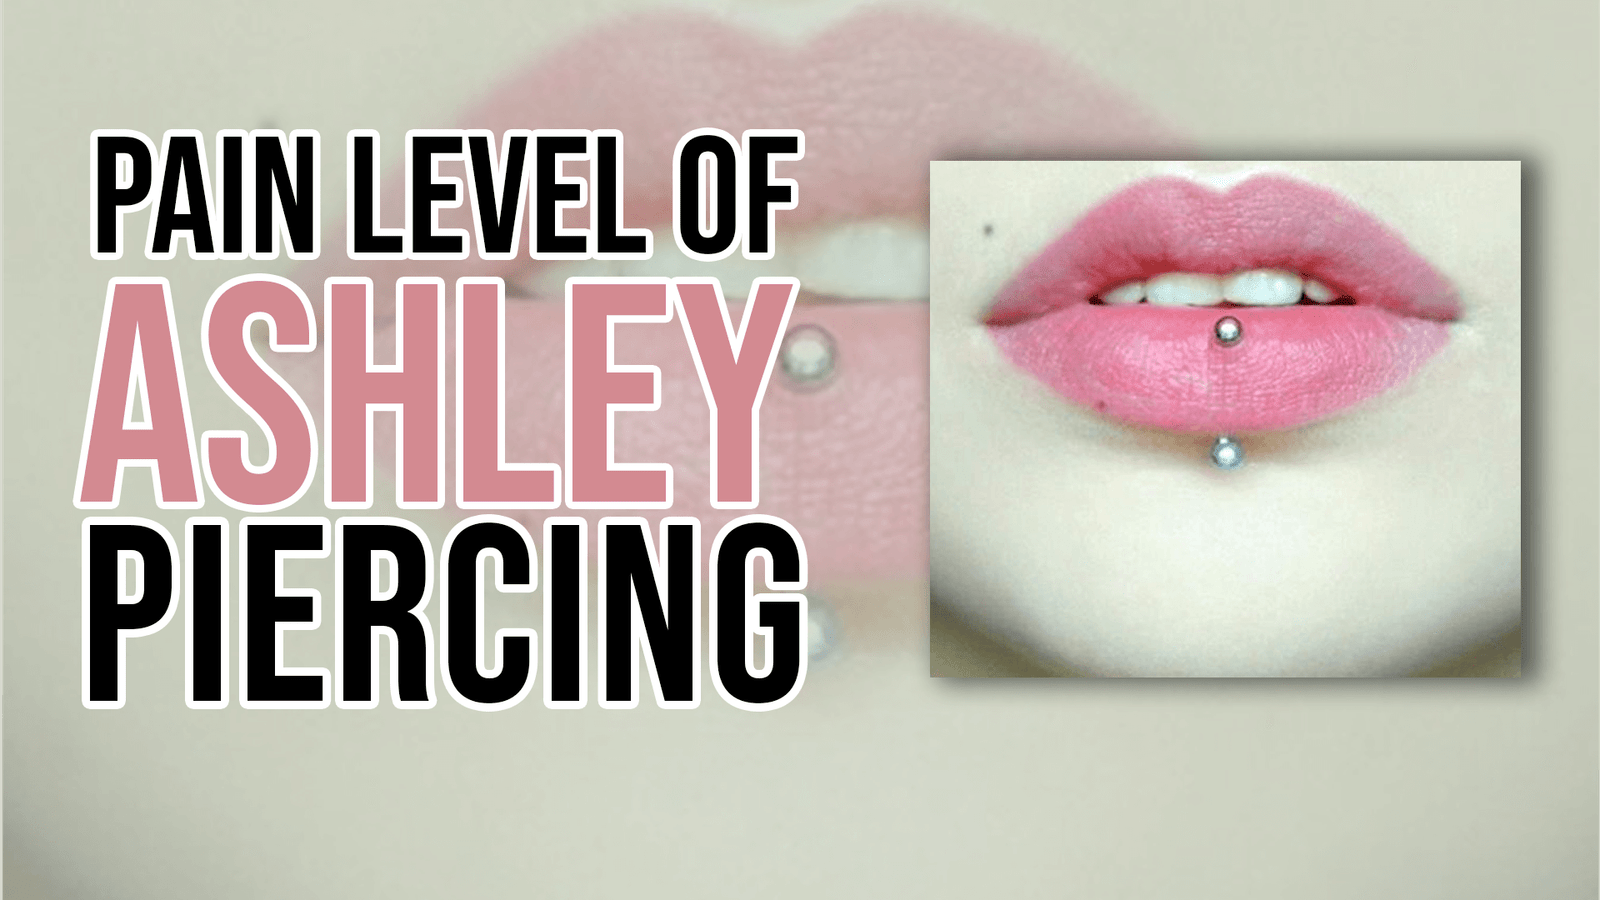 Pain Level of Ashley Piercing